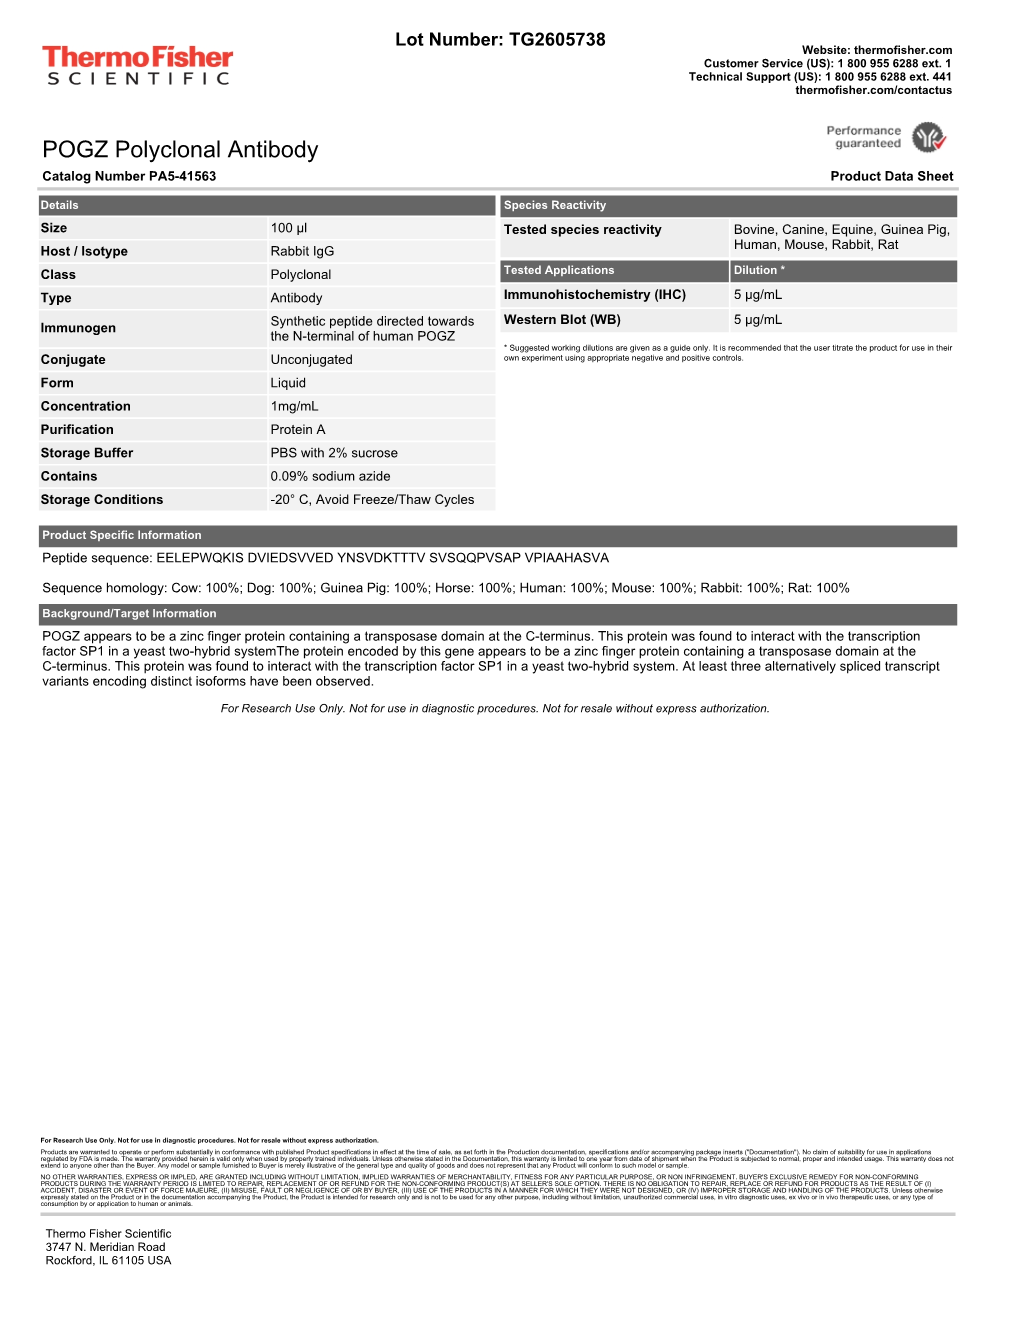 POGZ Polyclonal Antibody Catalog Number PA5-41563 Product Data Sheet